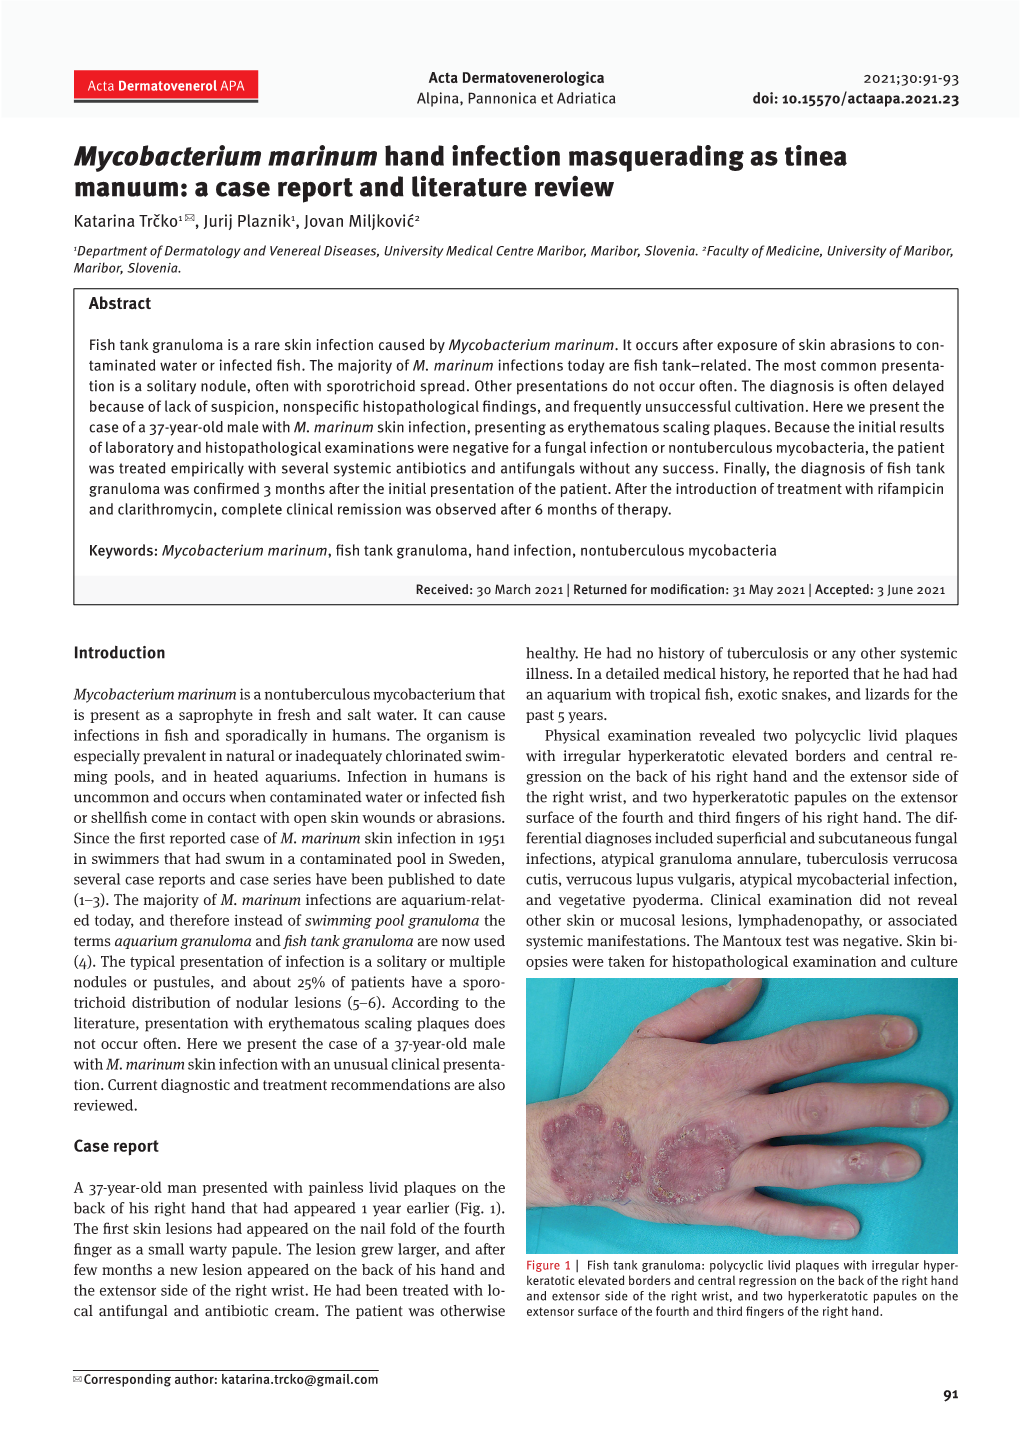 Mycobacterium Marinum Hand Infection Masquerading As Tinea Manuum: a Case Report and Literature Review Katarina Trčko1 ✉, Jurij Plaznik1, Jovan Miljković2